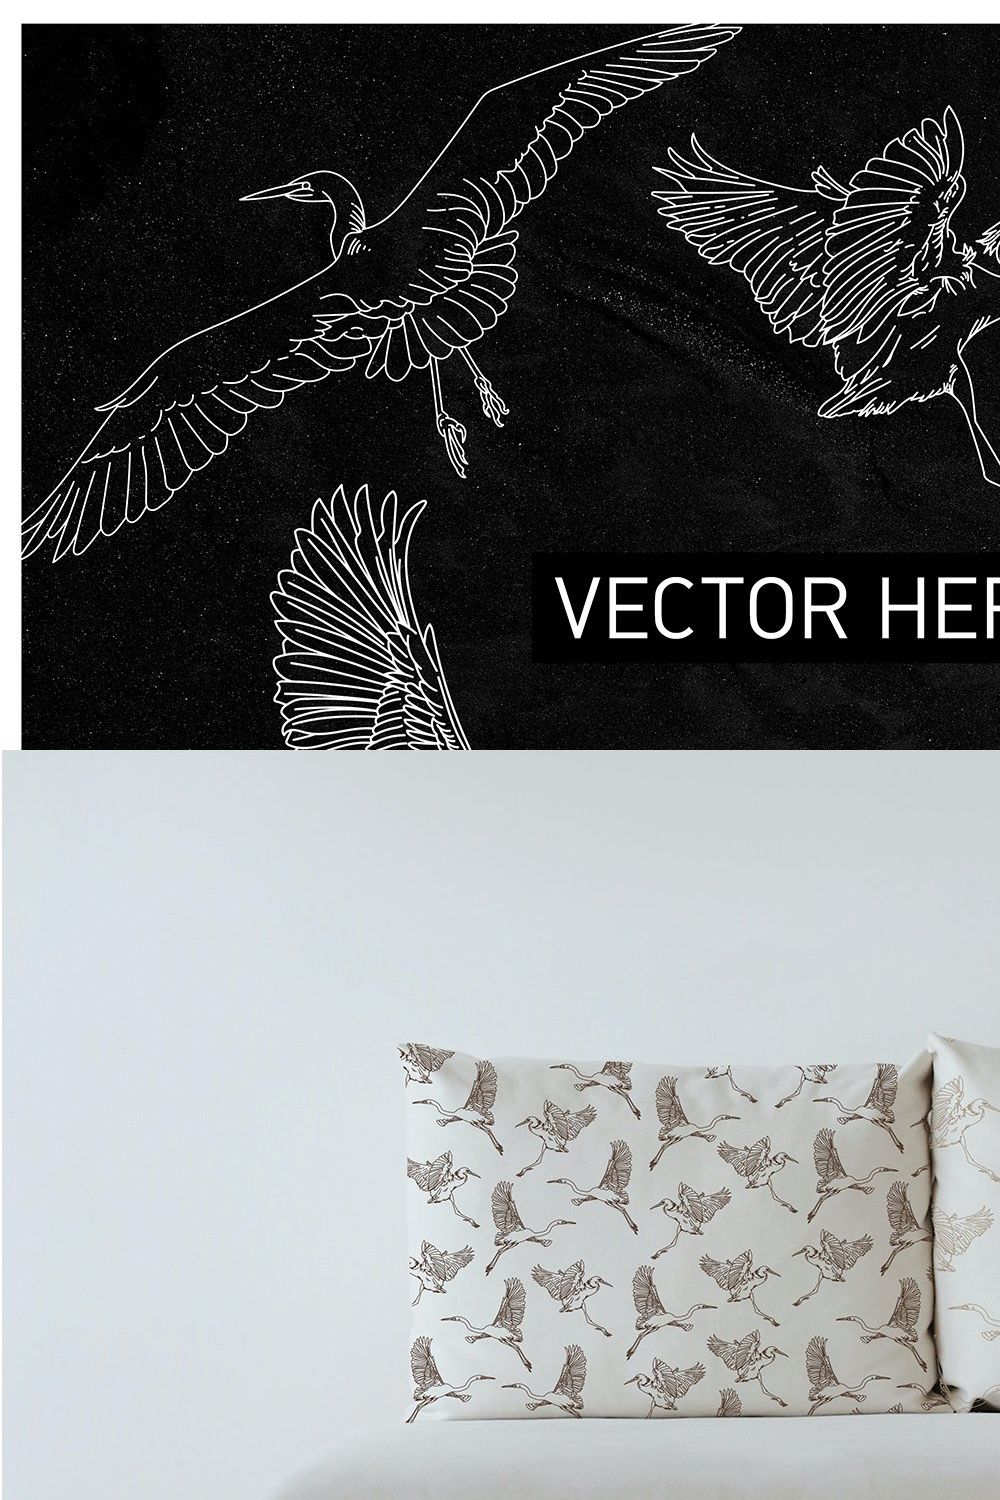 Vector Heron Set pinterest preview image.